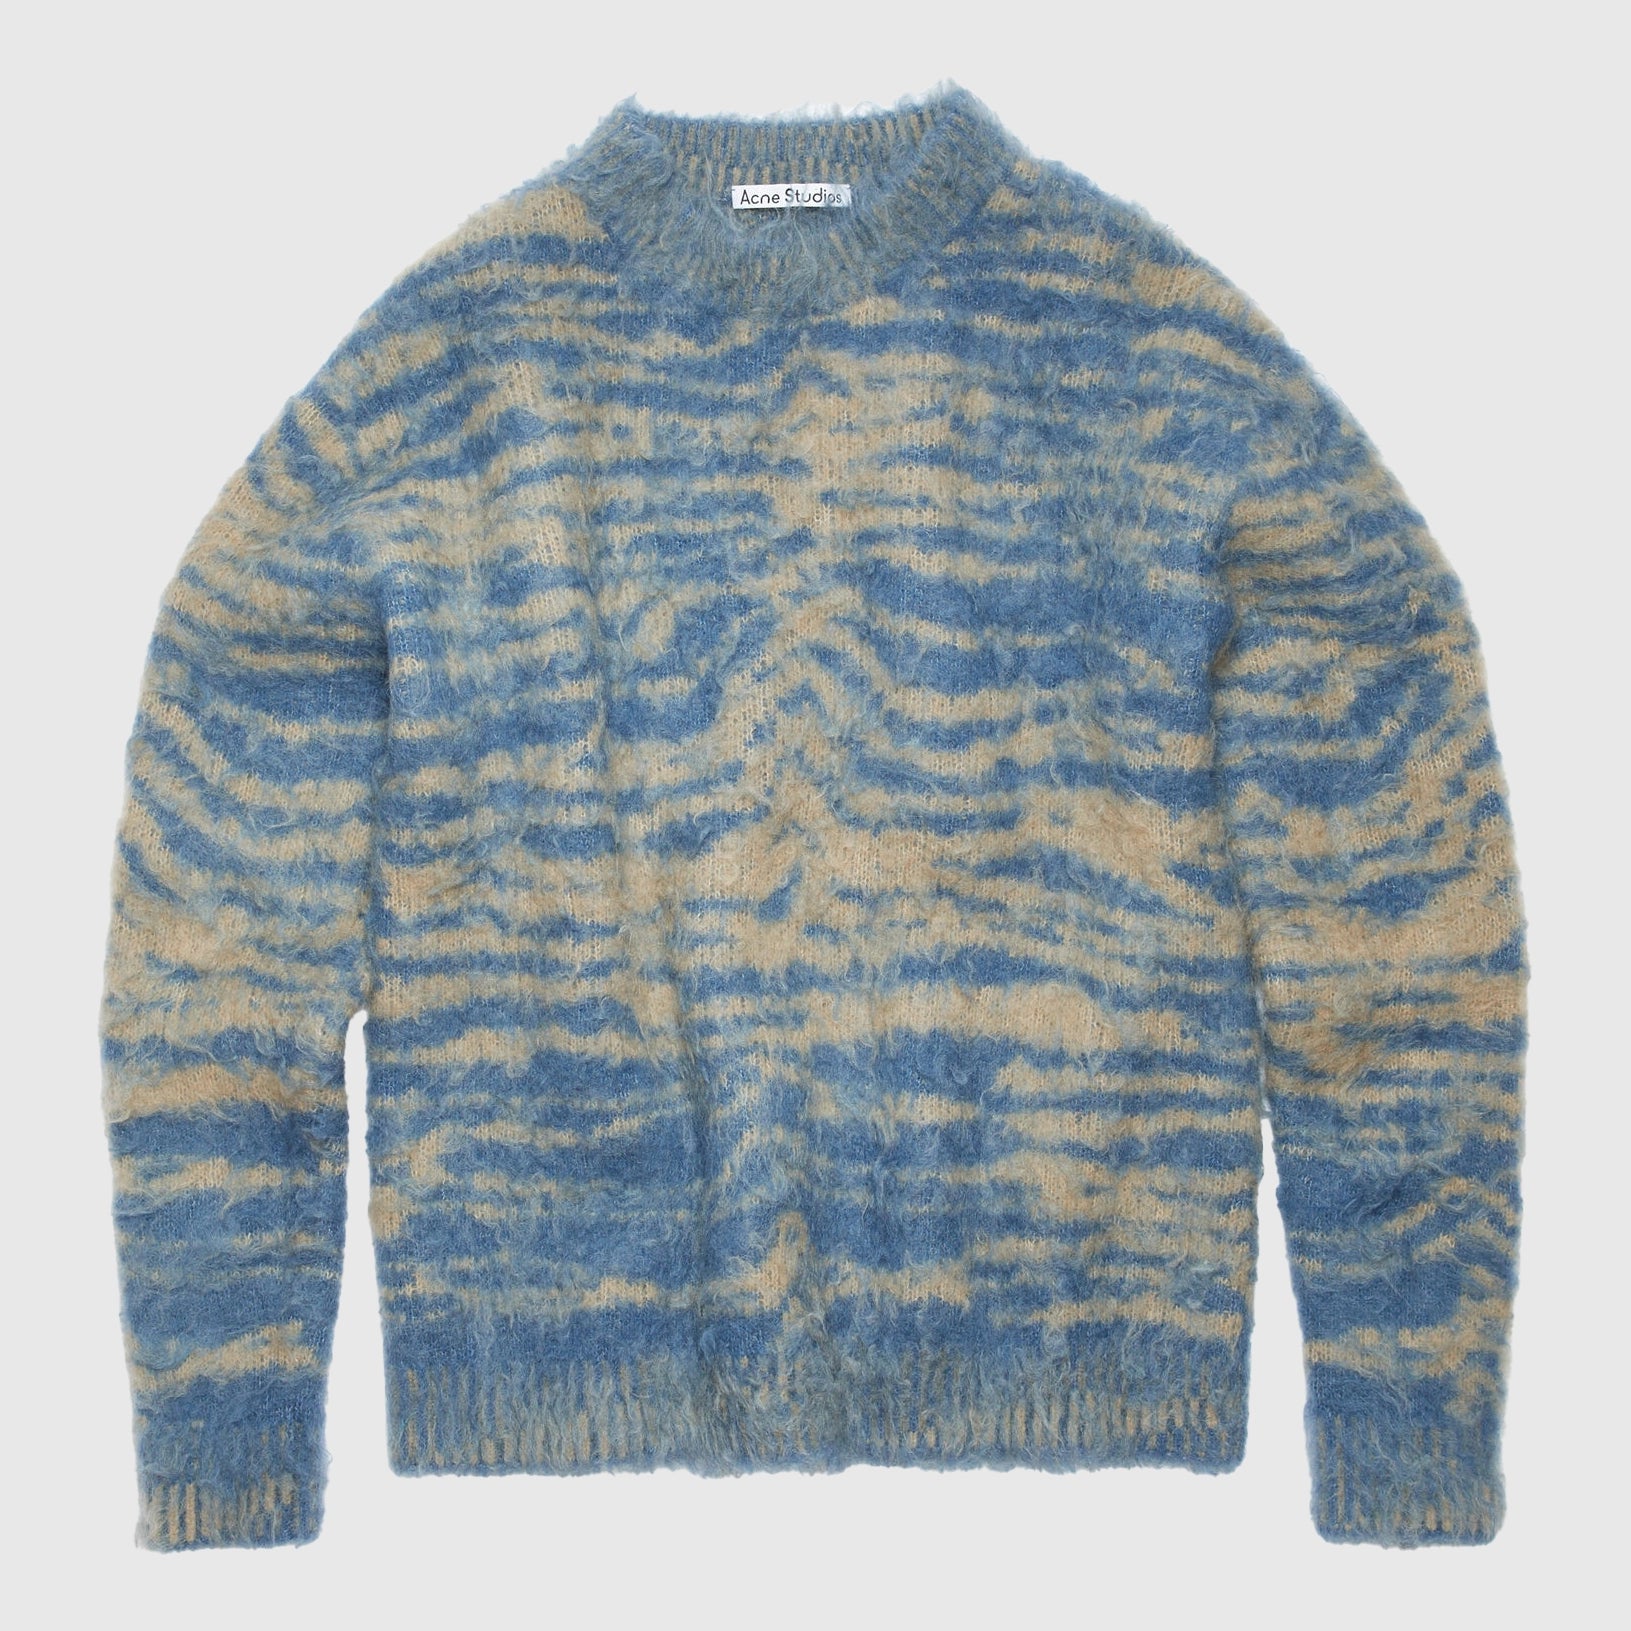 Acne Studios Crewneck Wool Jumper - Denim Blue / Dark Beige Knitwear Acne Studios 